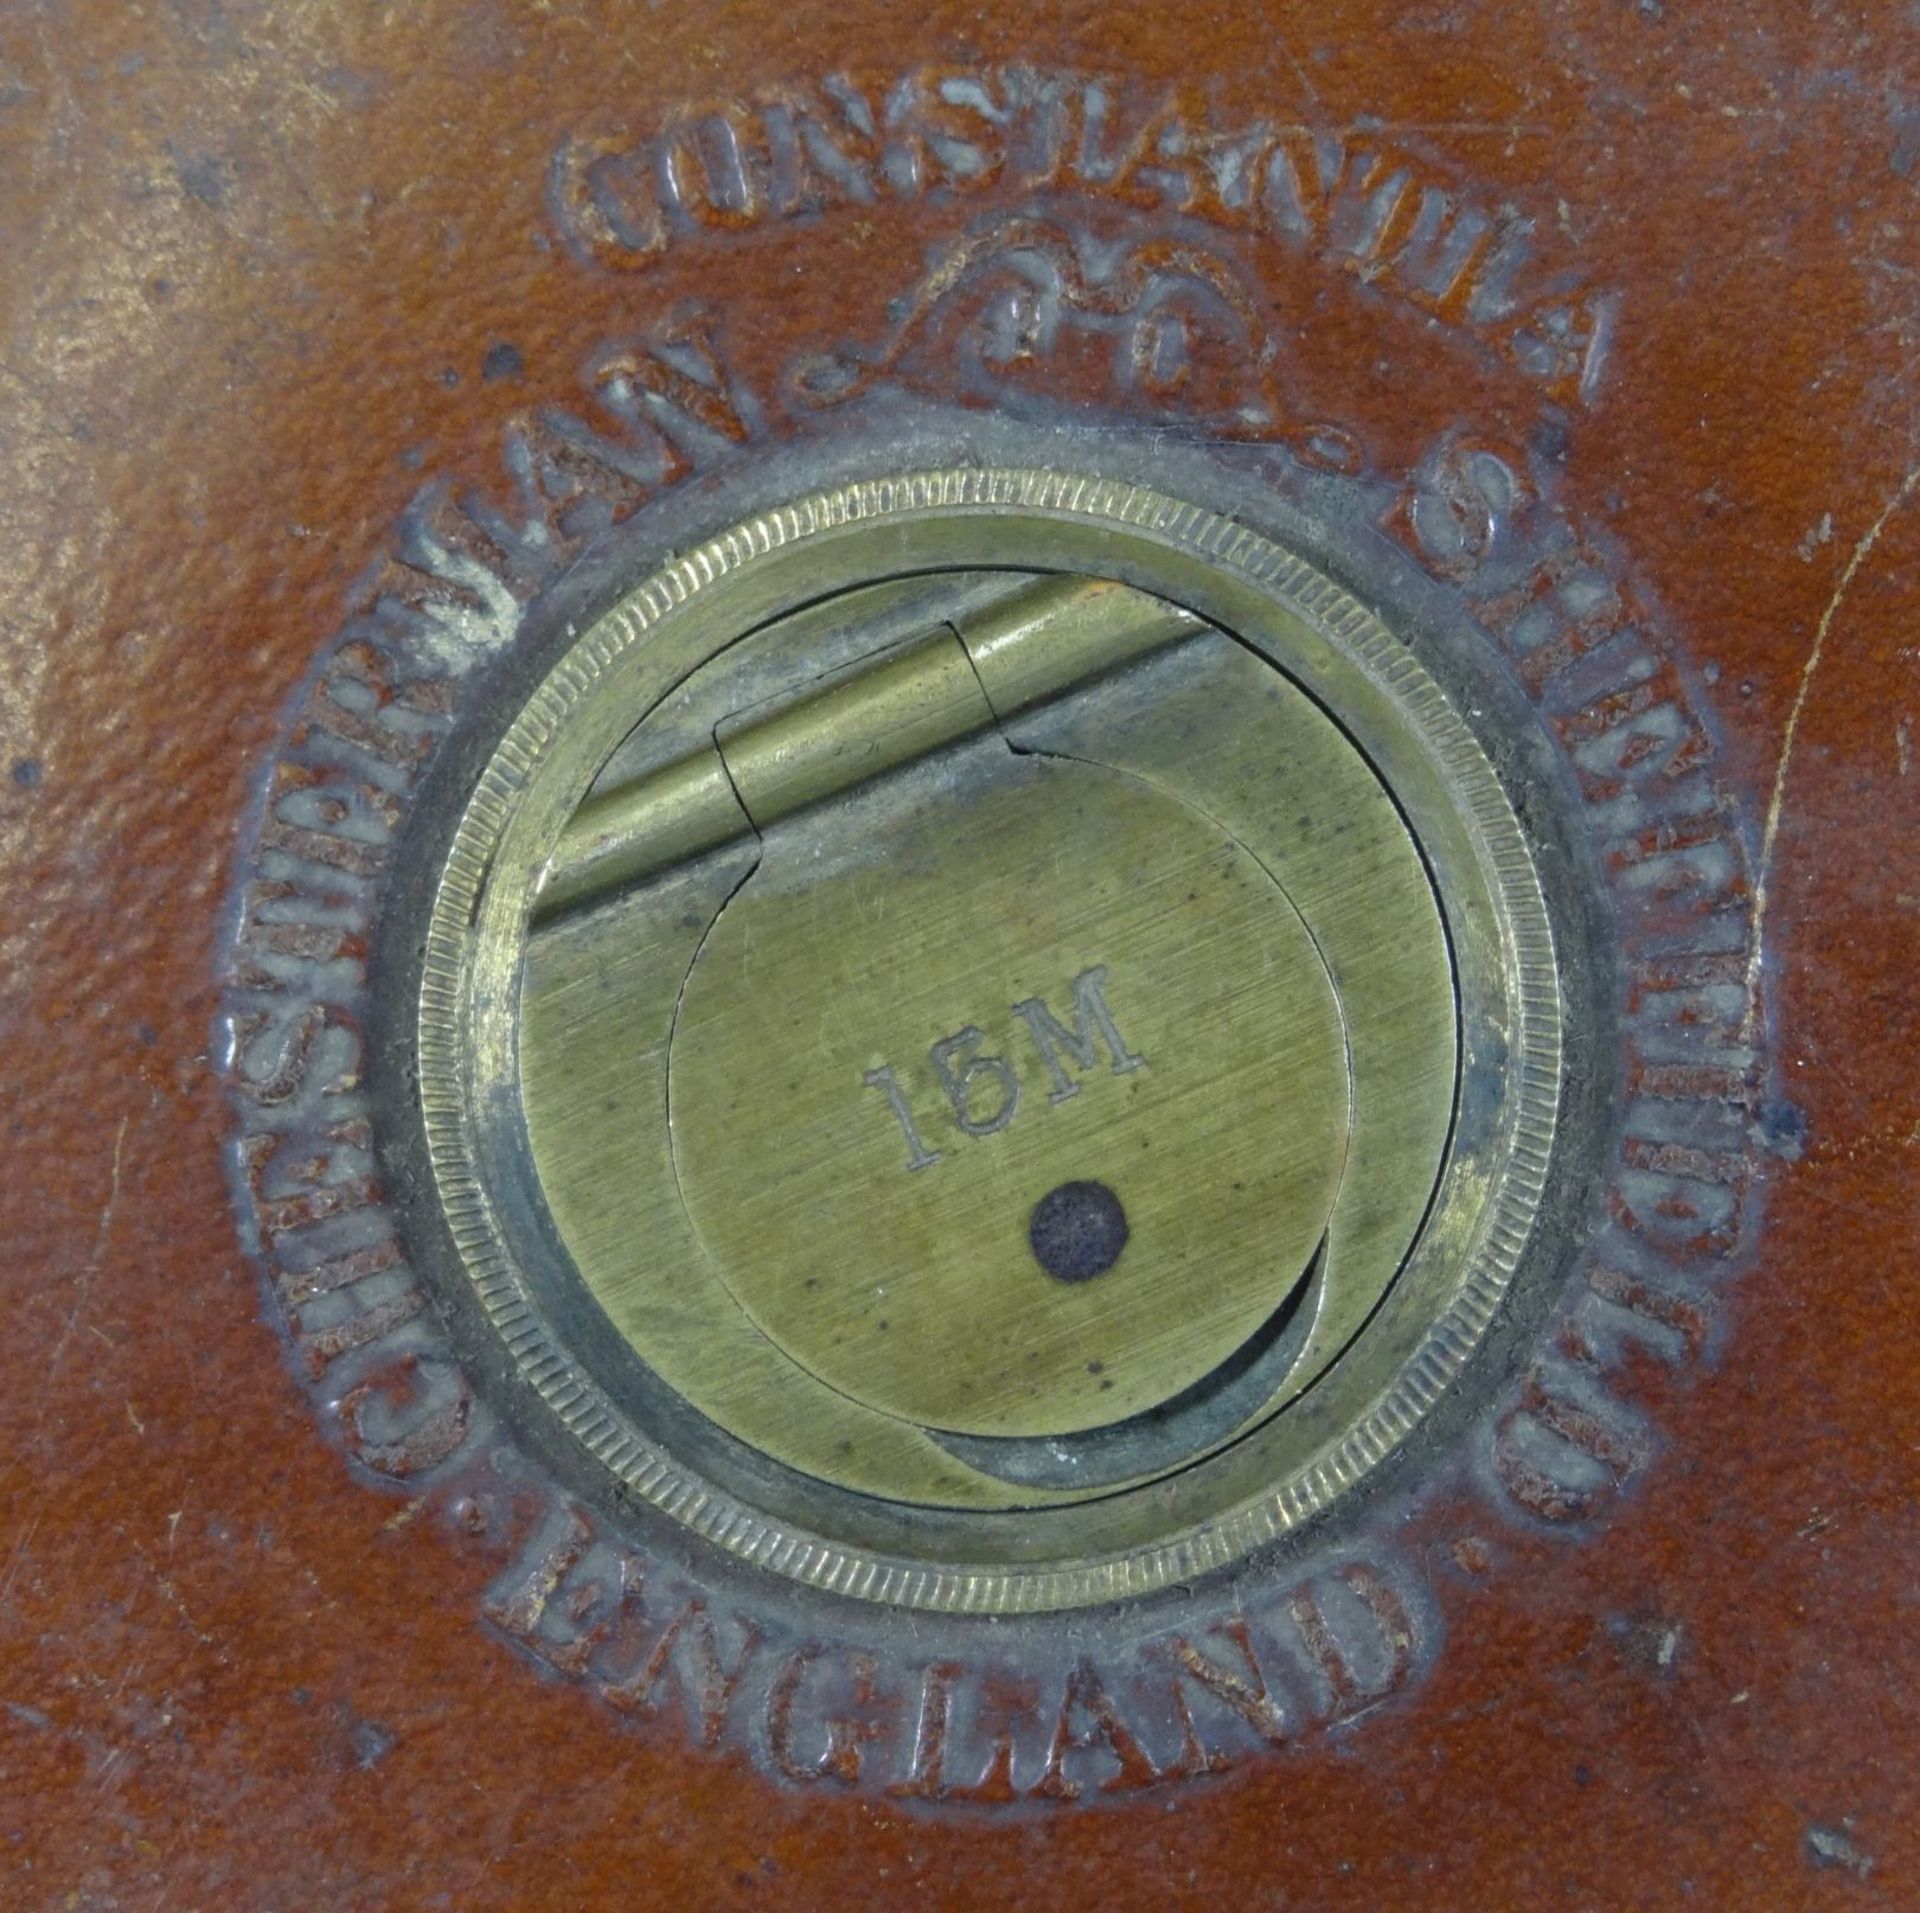 langes Massband zum ausrollen, Lederhülle "Constanta" Sheffield, D-11 cm, Alters-u. Gebrauchsspure - Image 3 of 5